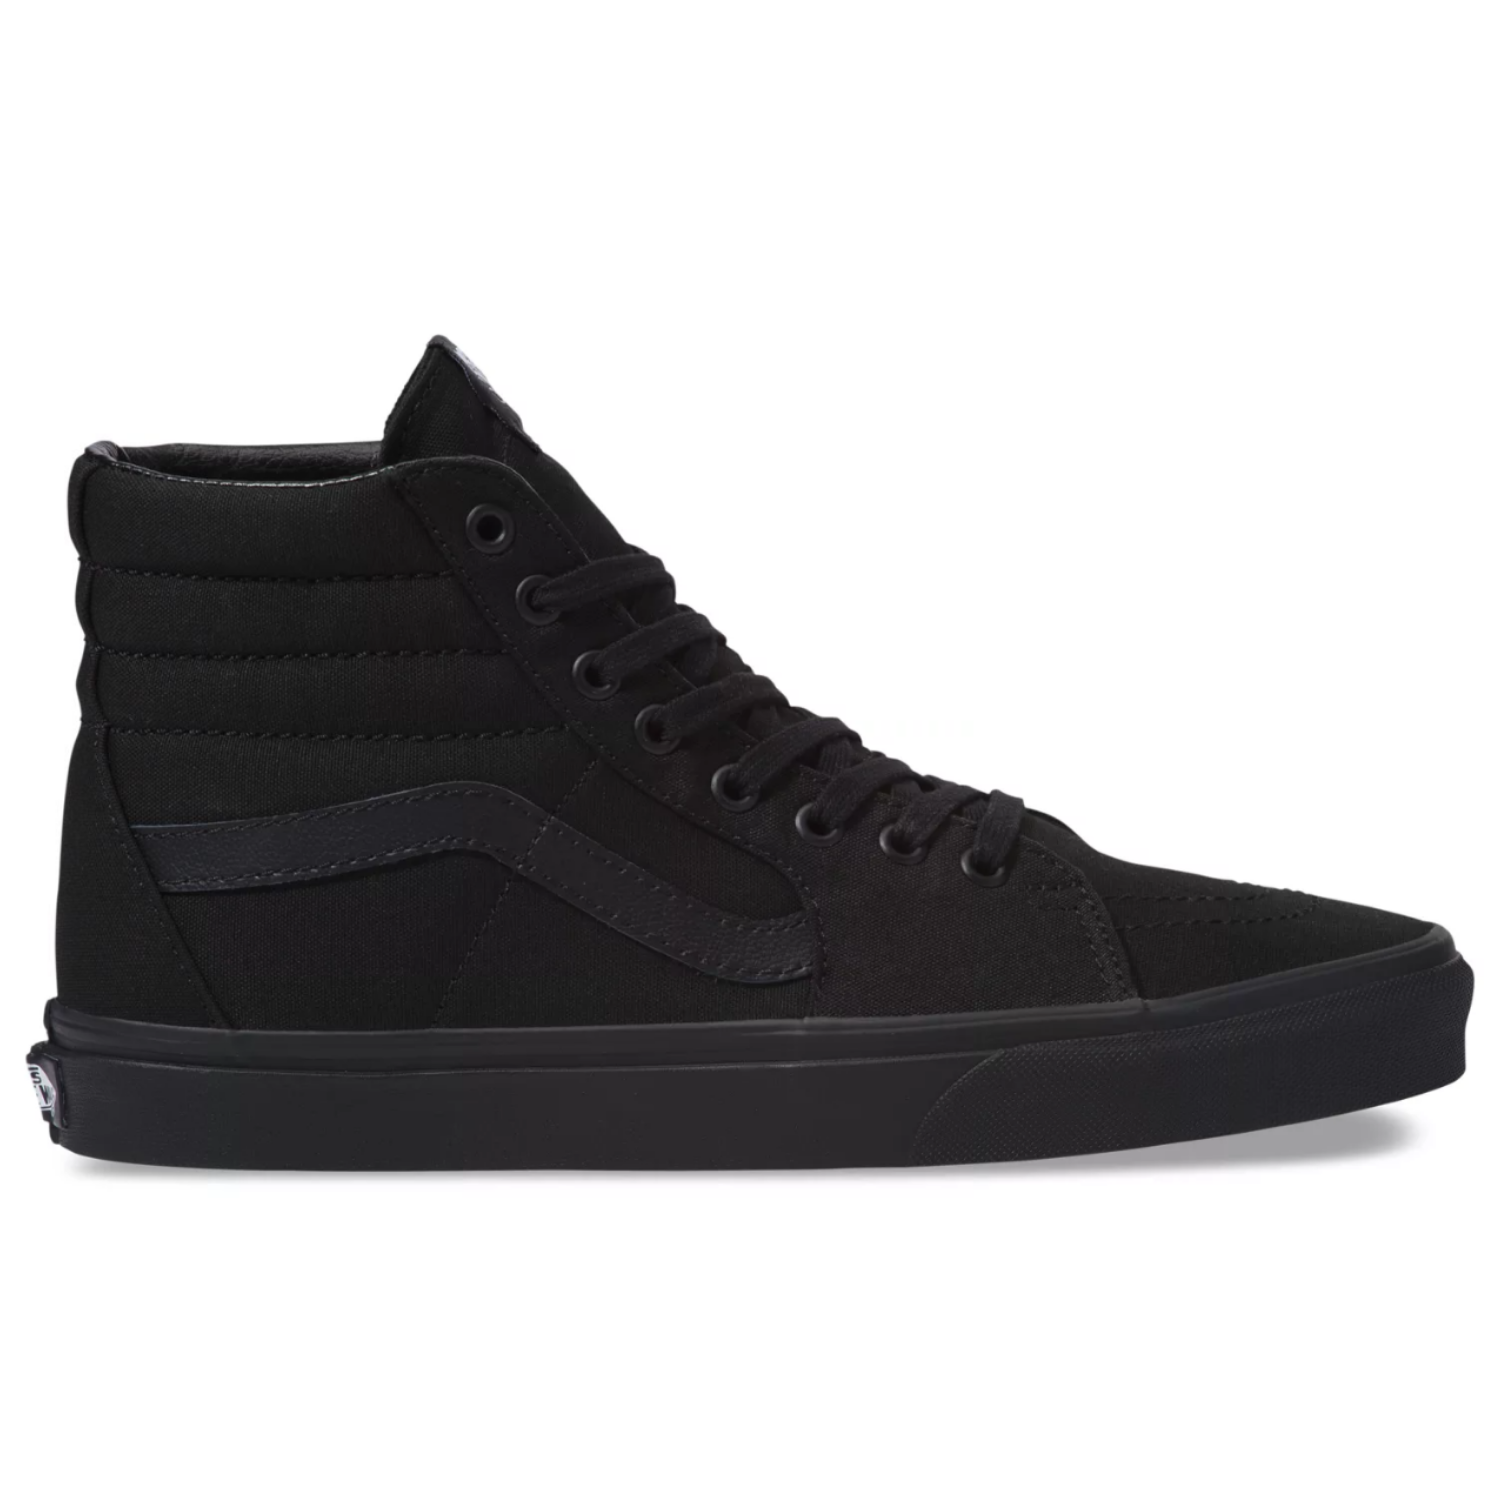 Vans Sk8 Hi Shoes - Black Black